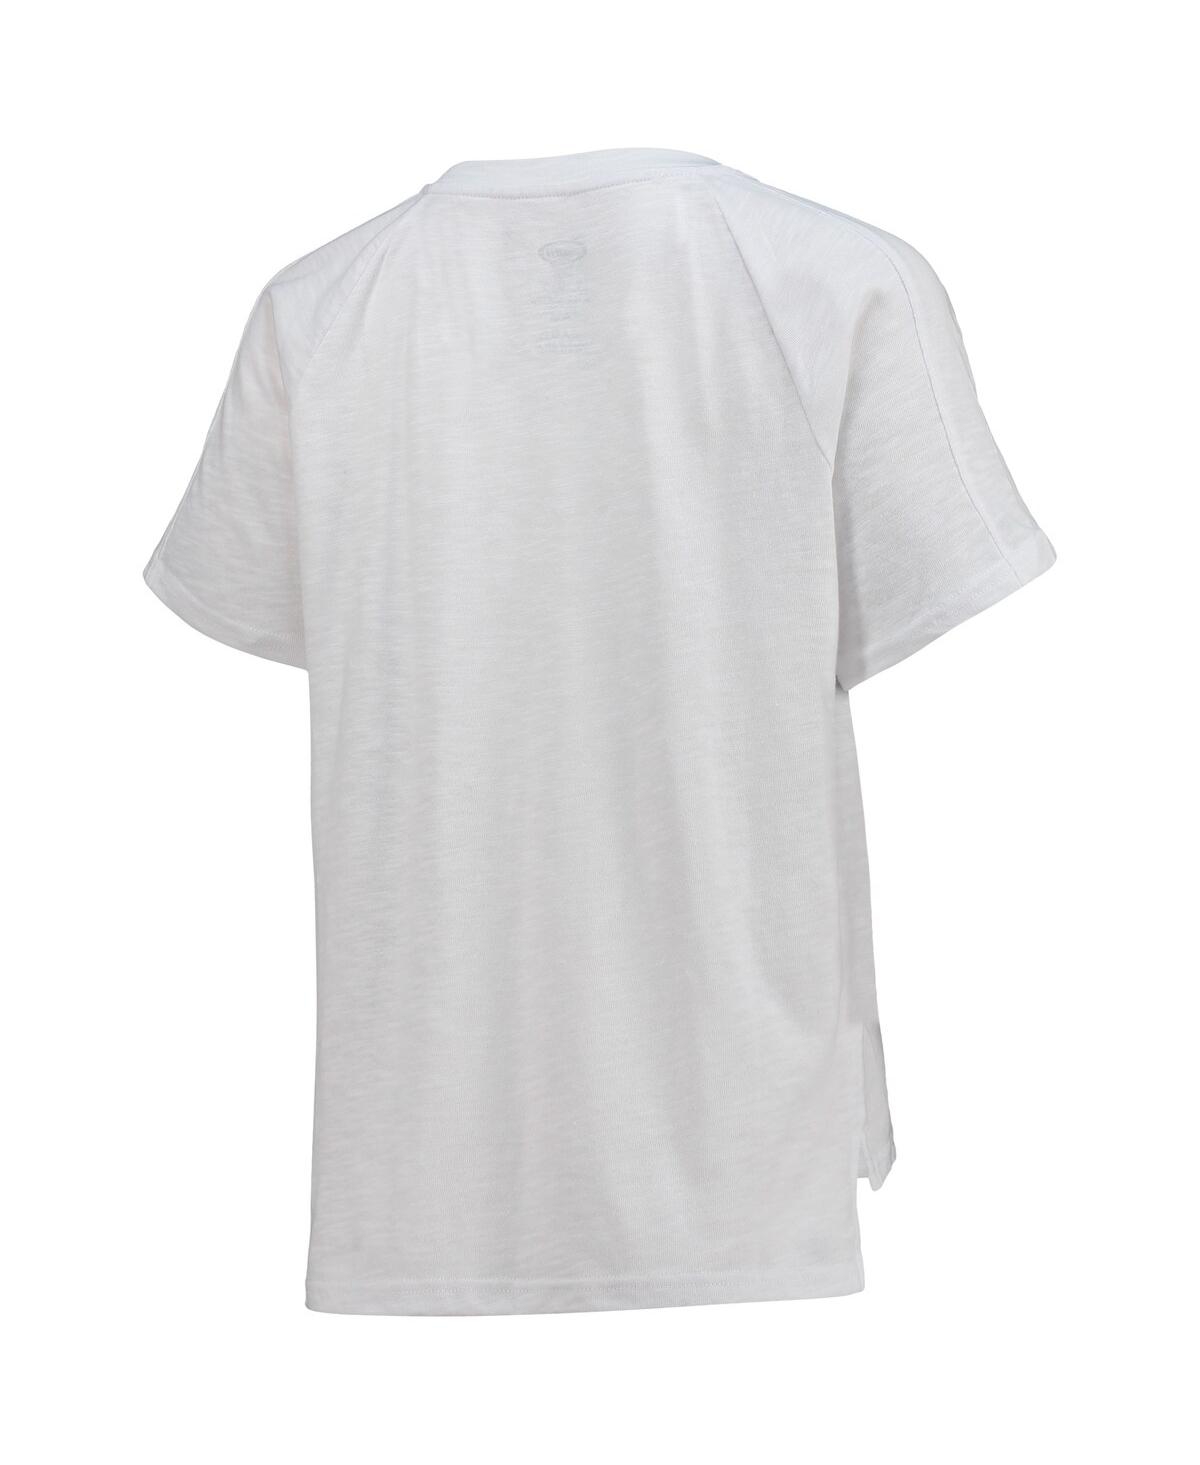 Shop Concepts Sport Women's  White Distressed Inter Miami Cf Resurgence T-shirt